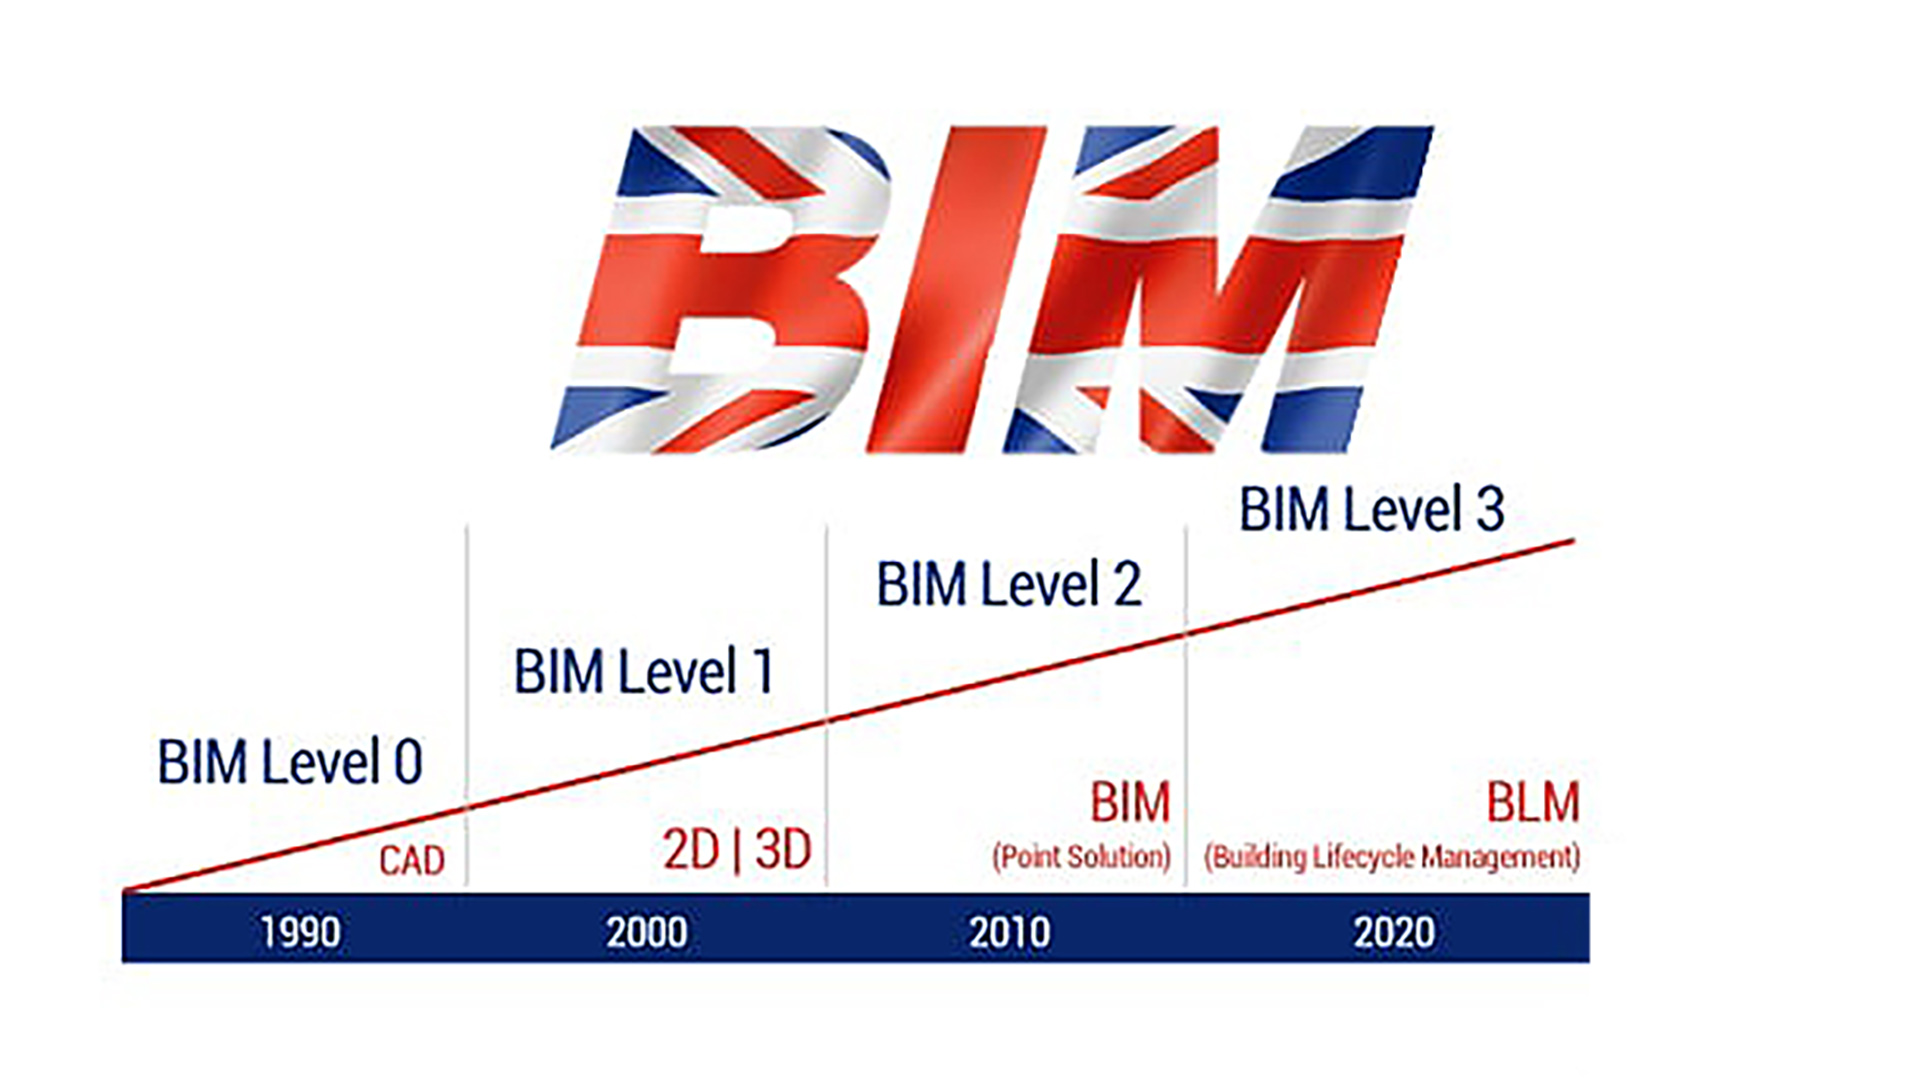 BIM Implementation in the world: 1- United Kingdom